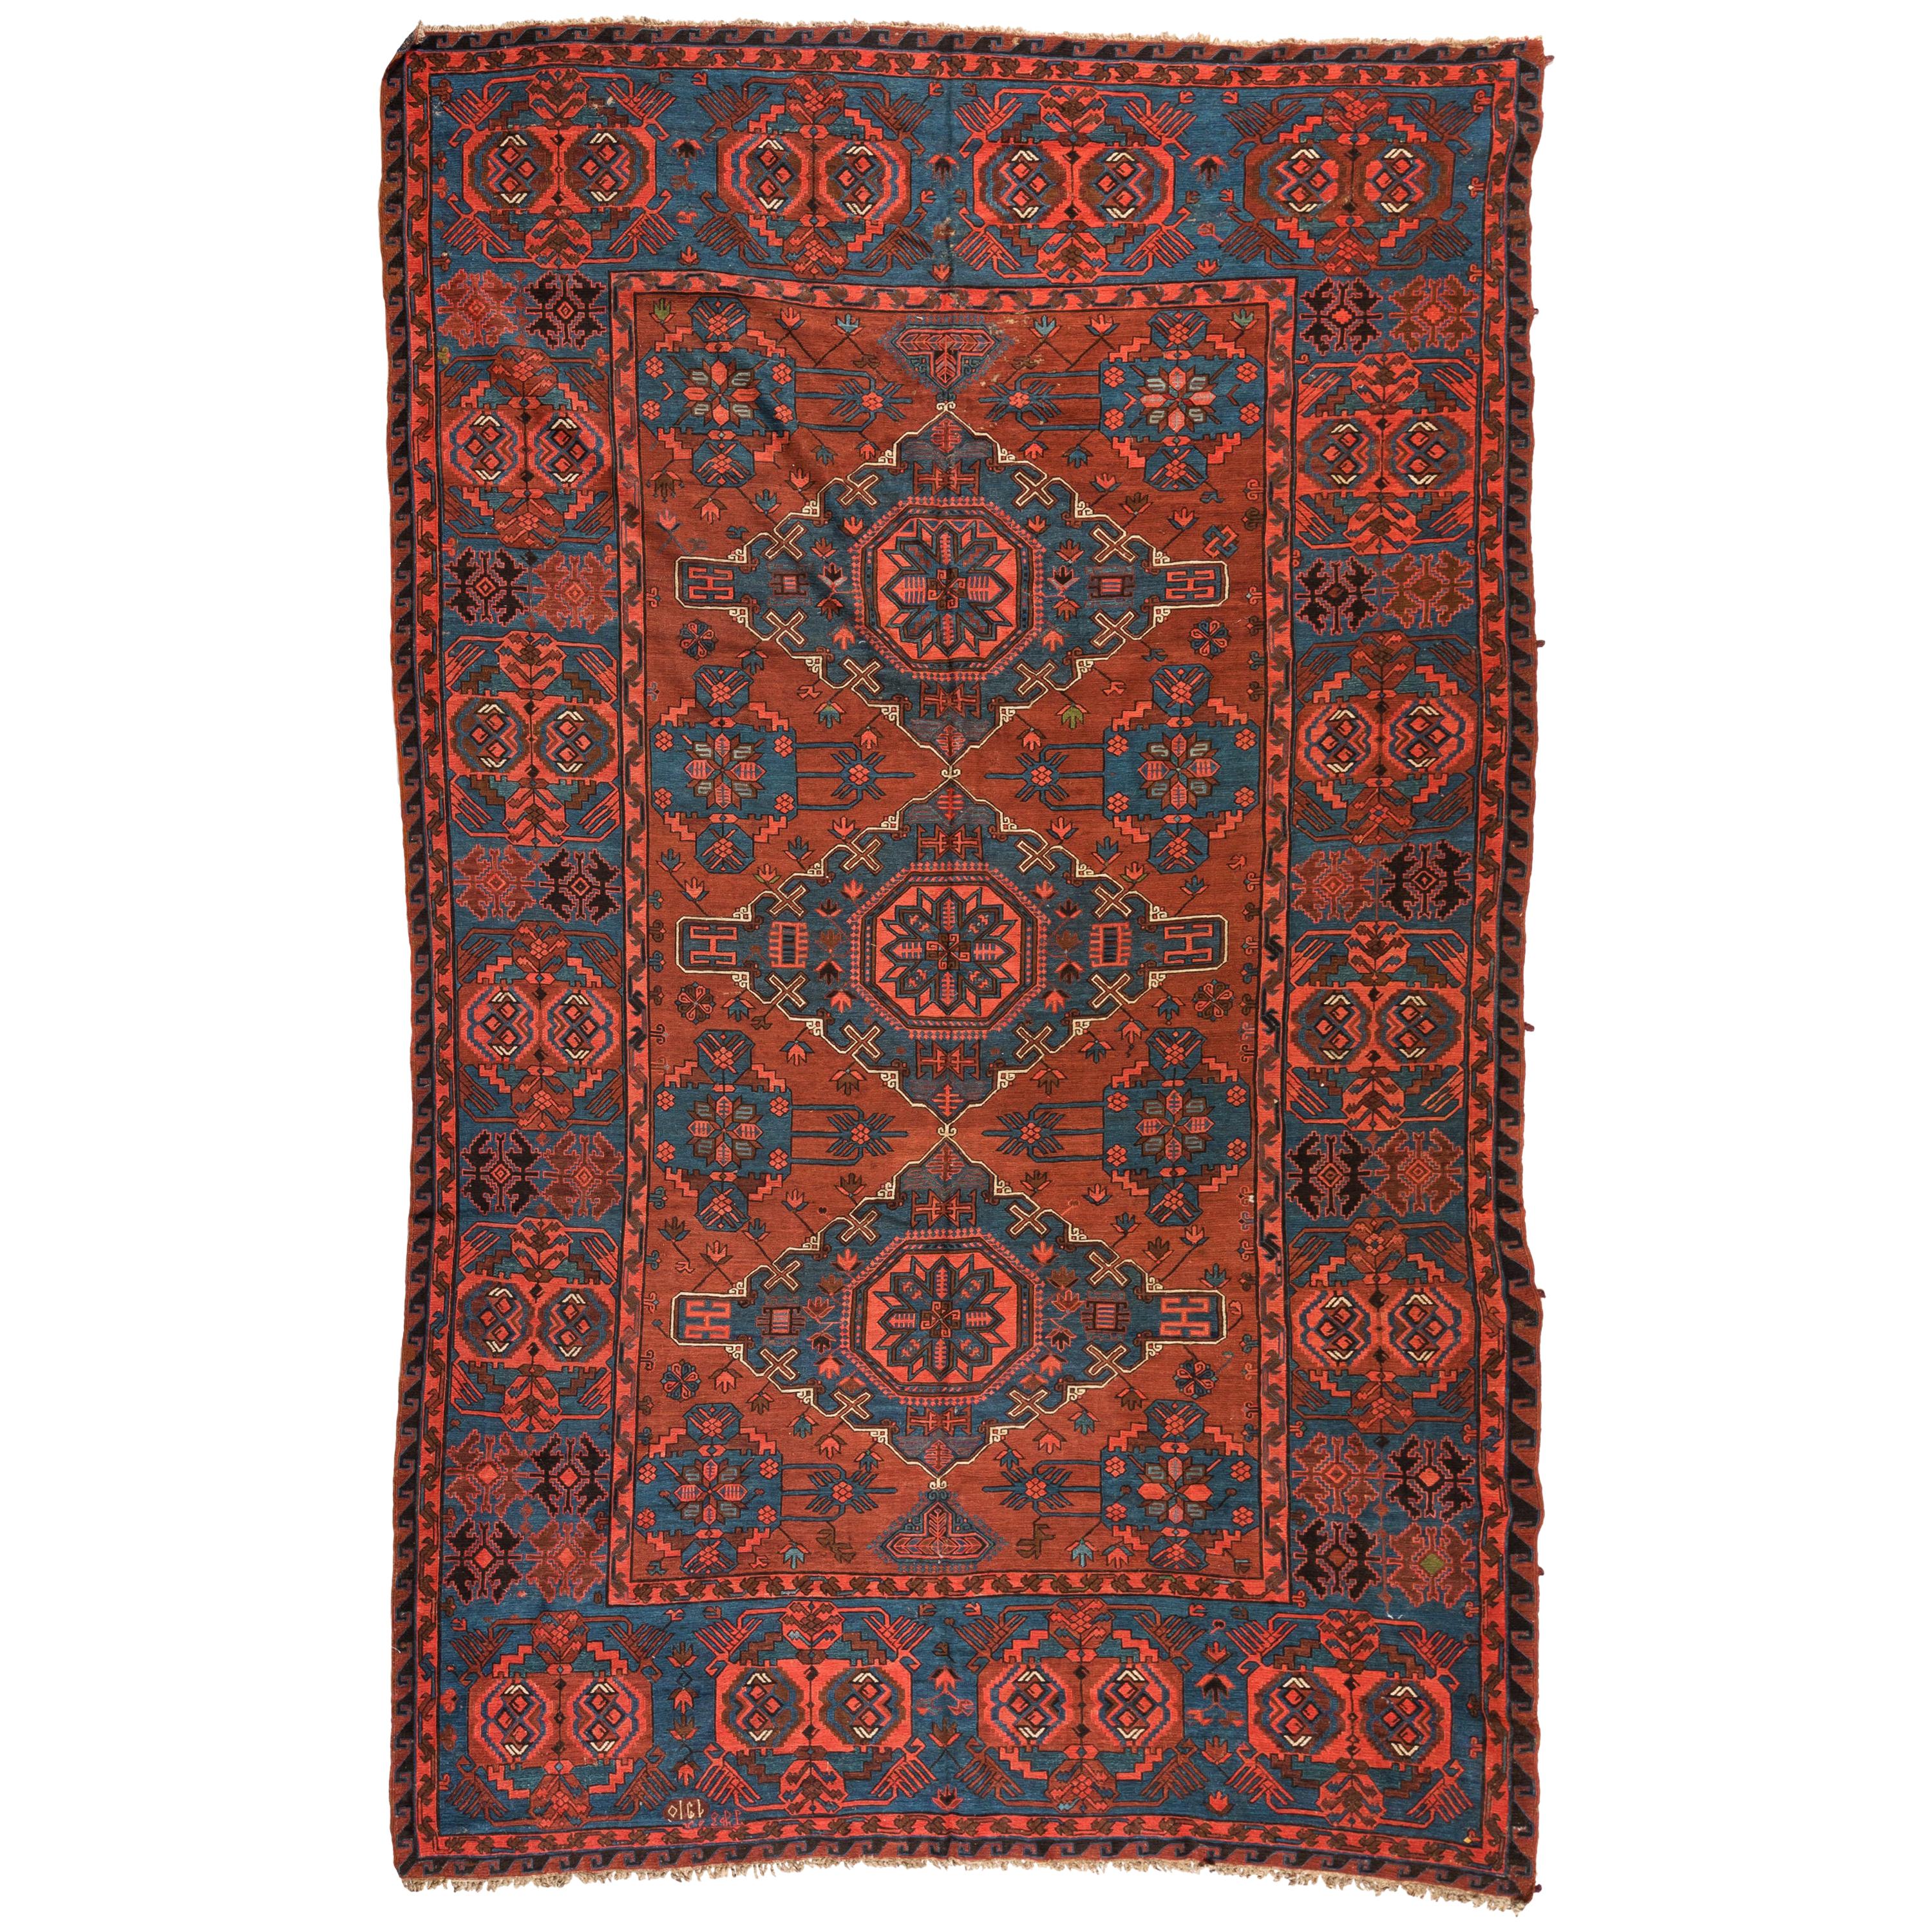 Antique Vintage Red and Blue Caucasian Soumak Tribal Flat-Weave Rug, circa 1930s